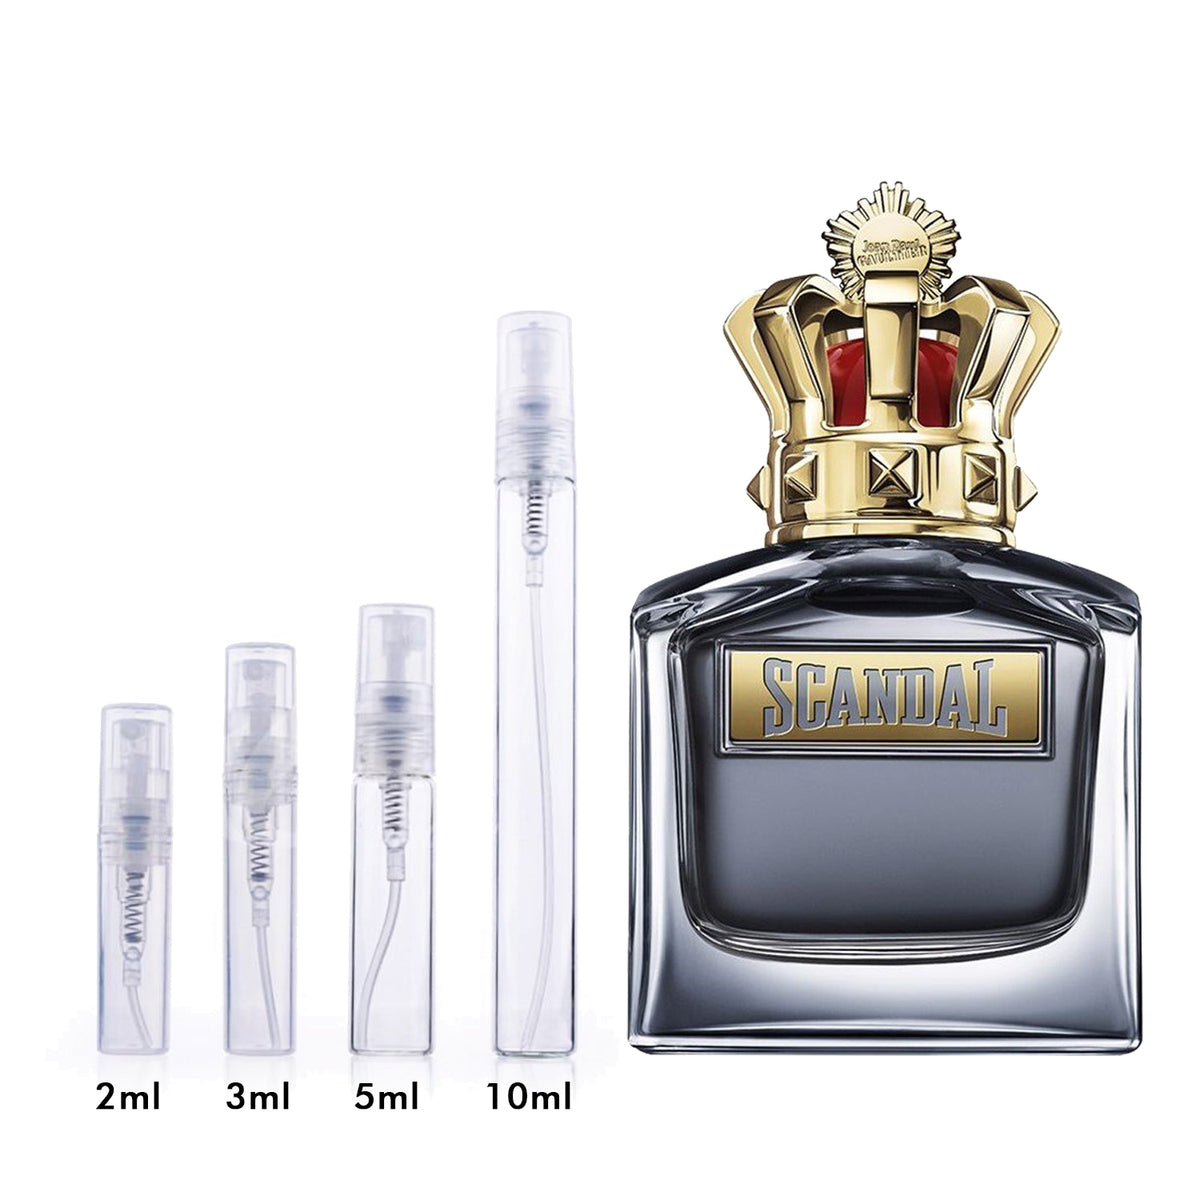 Scandal Le Parfum Sample 